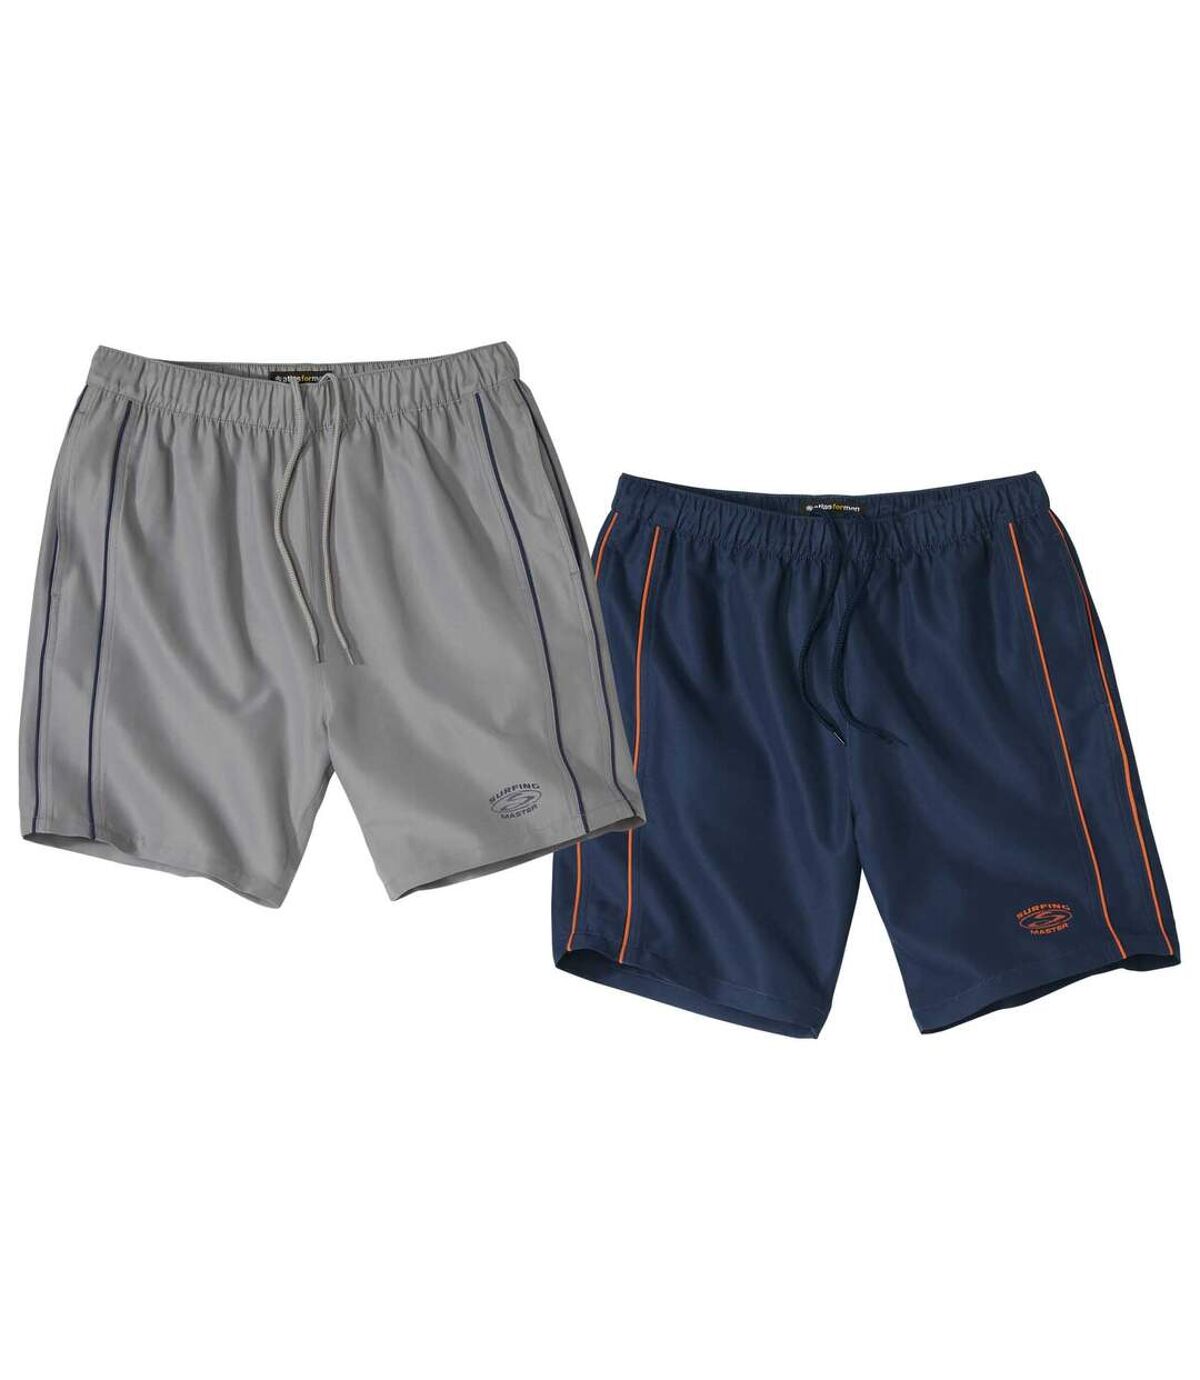 Pack of 2 Men's Microfibre Shorts - Grey Navy Atlas For Men